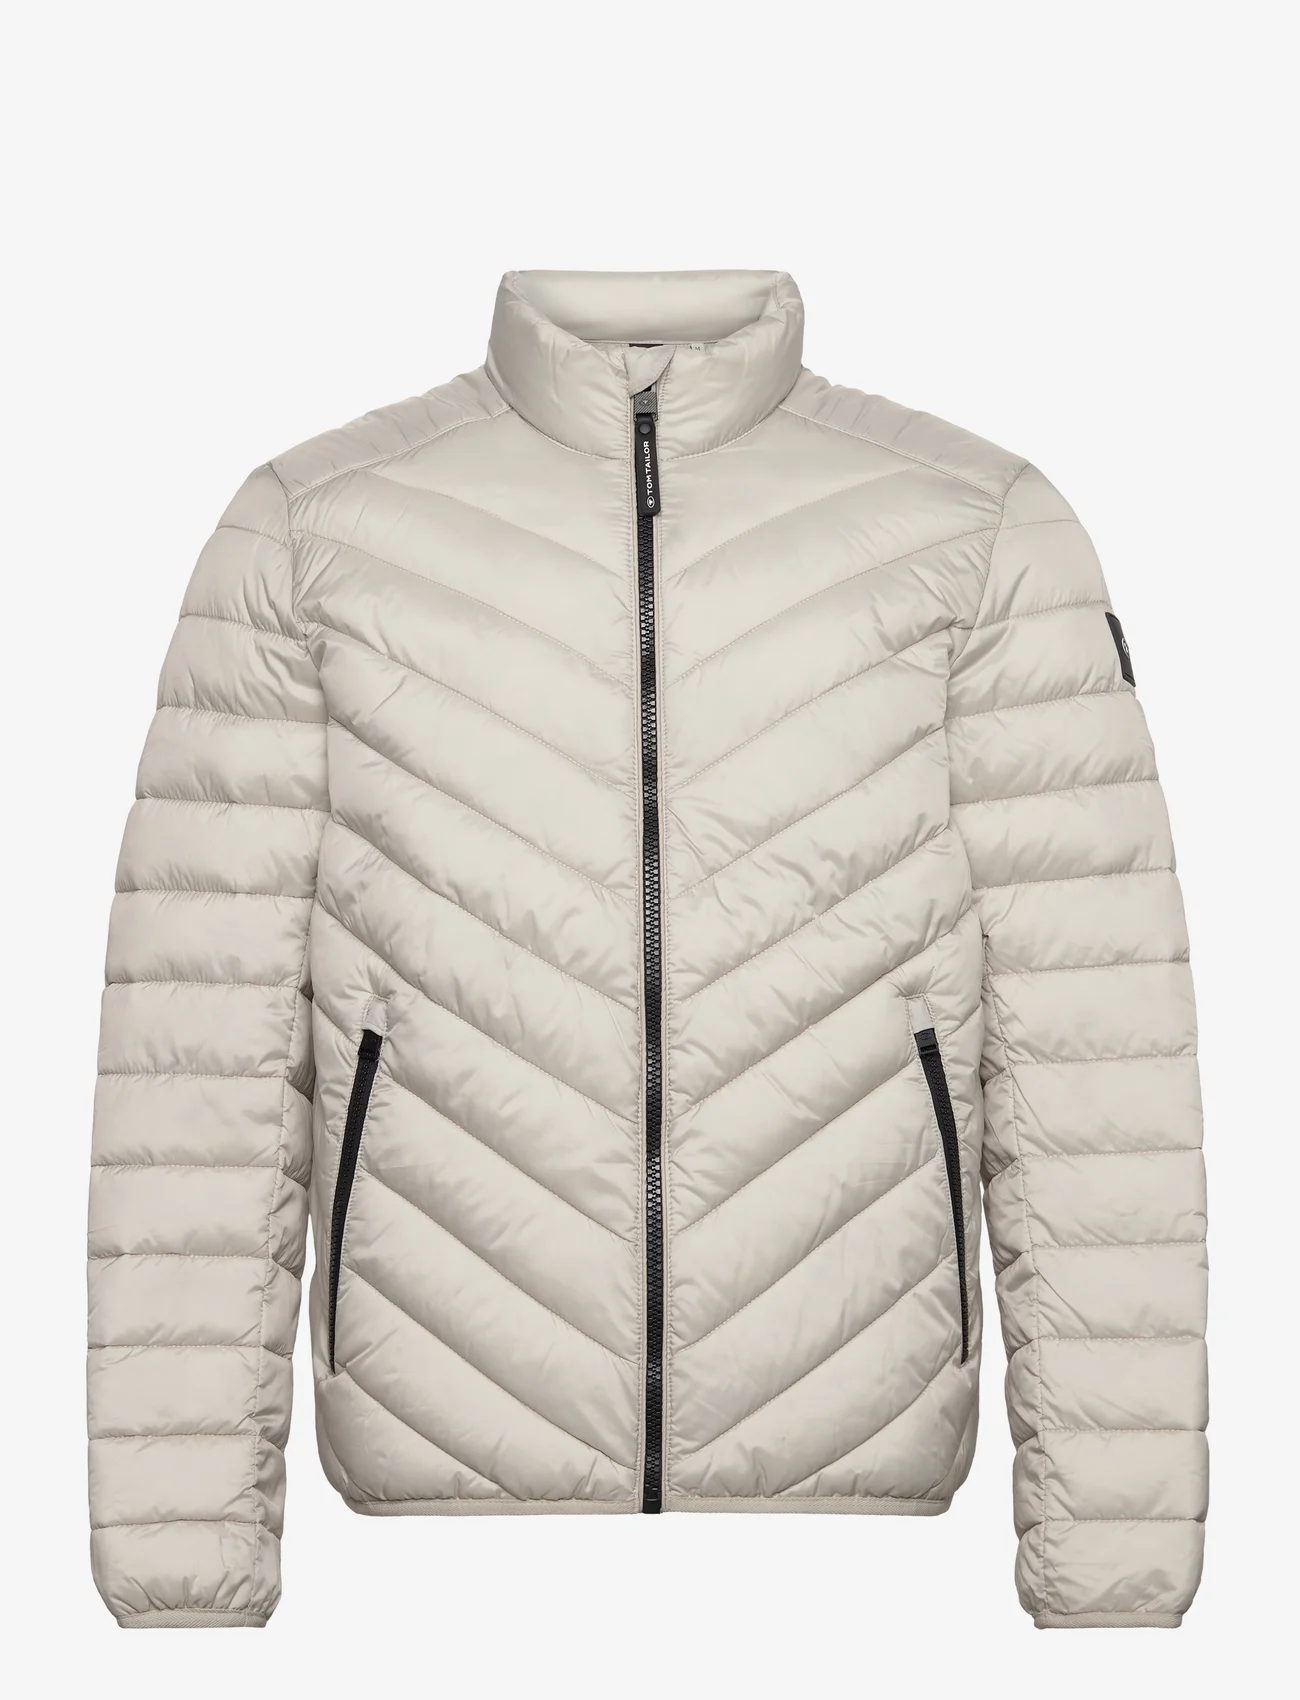 Tom Tailor - light weight jacket - winterjassen - beige alfalfa - 0